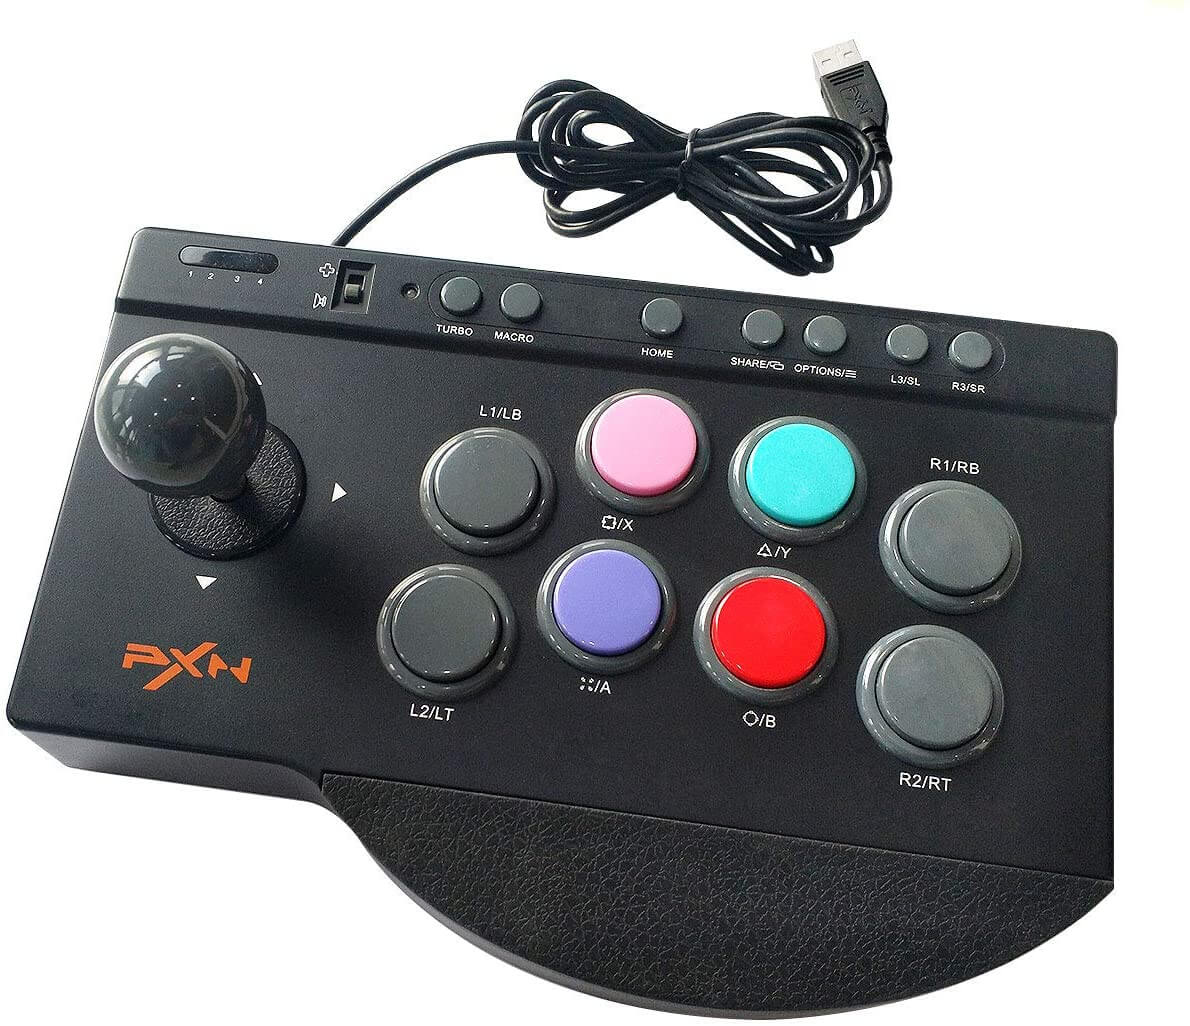  PXN Arcade Fight Stick, X8 Street Fighter Arcade Game